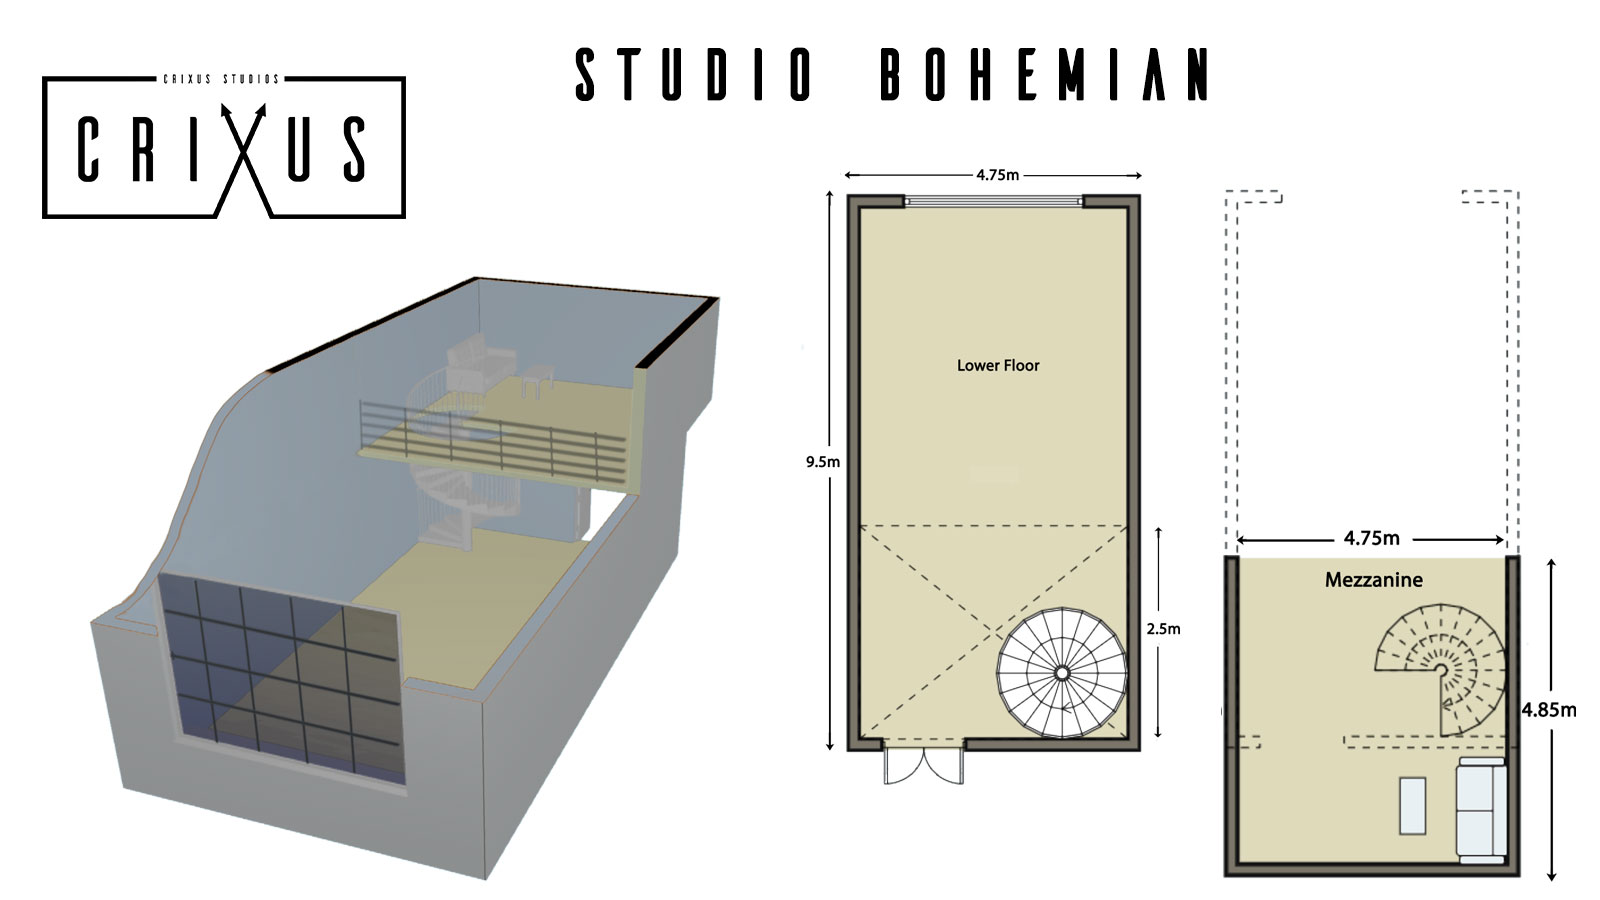 Studio Bohemian